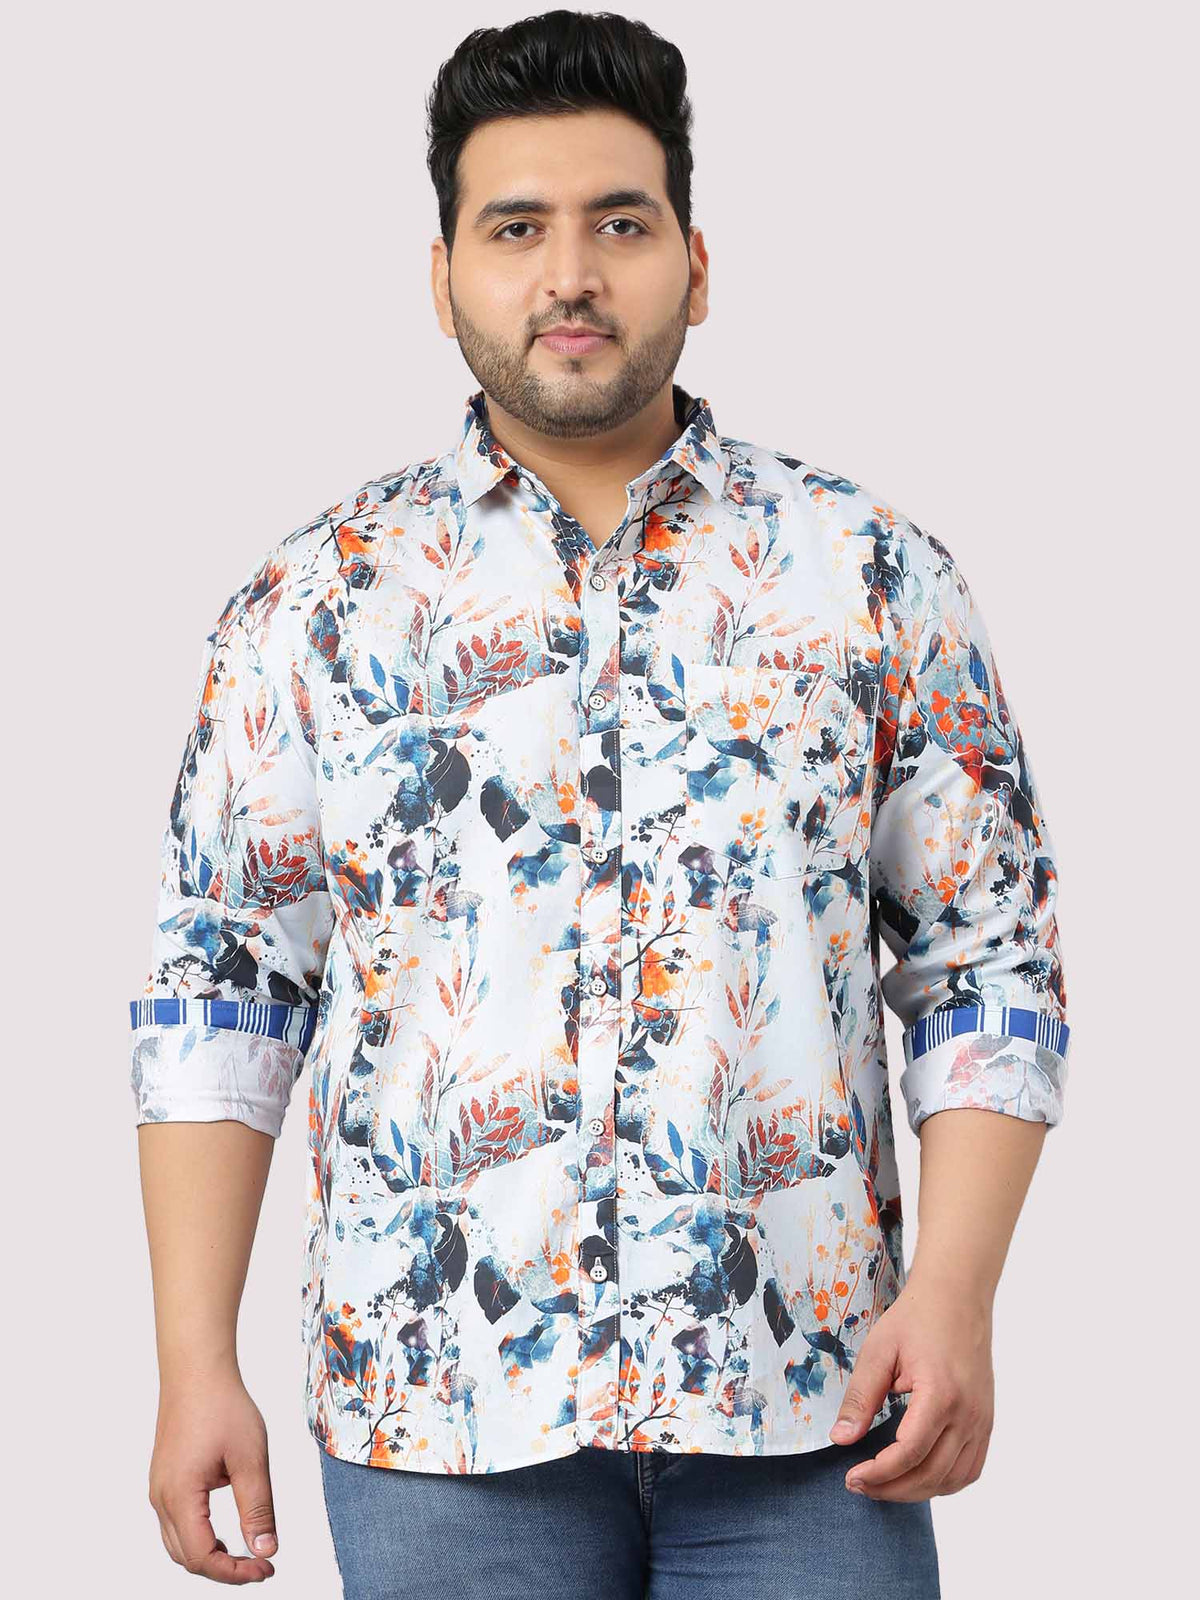 James Digital Printed Shirt Men's Plus Size